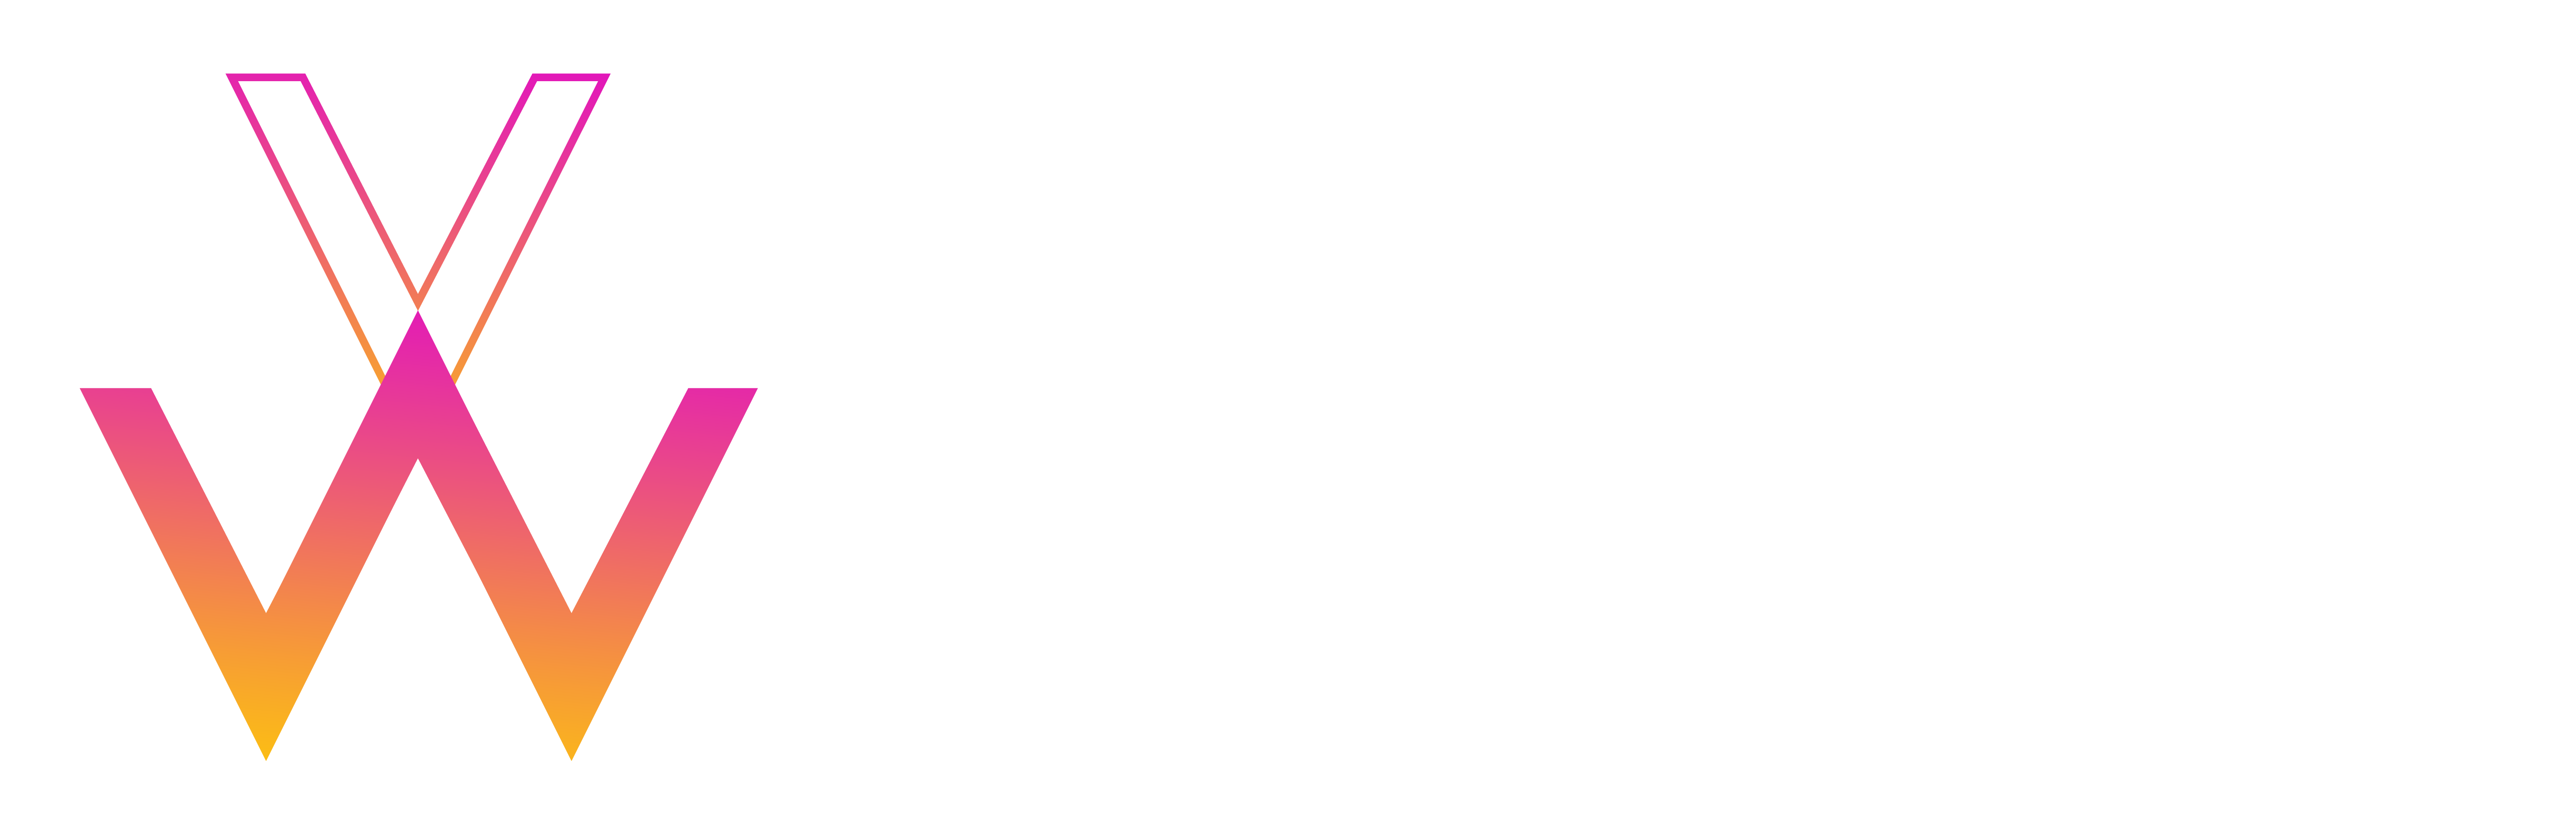 WaveX